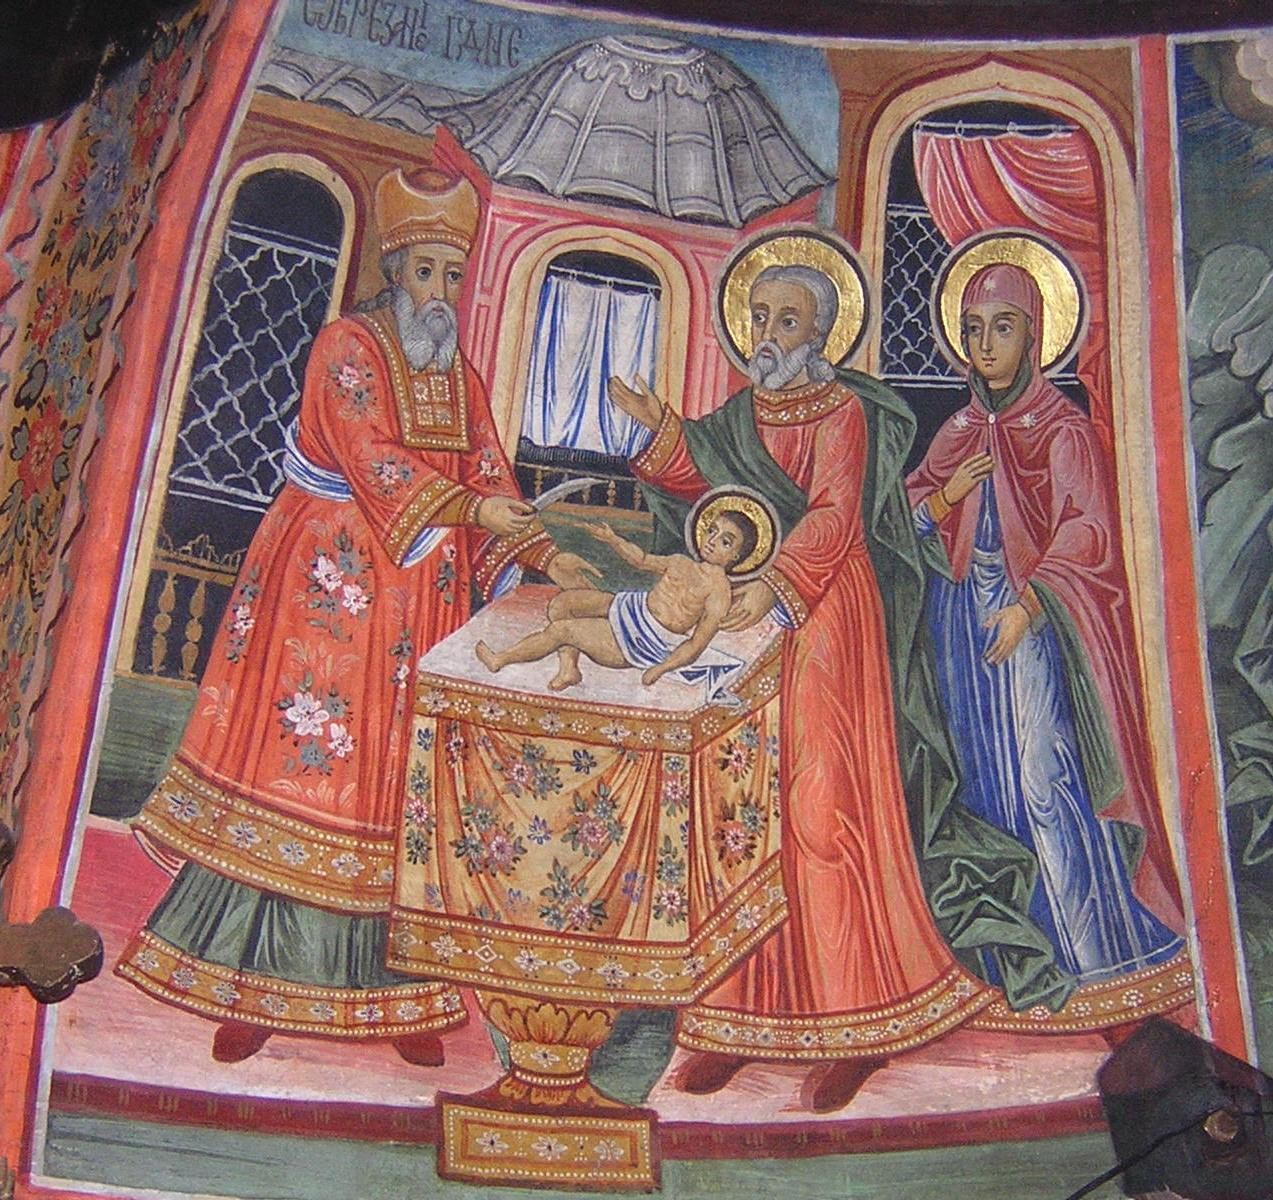 14 січня православна церква святкує велике свято Обрізання Господнє / © commons.wikimedia.org